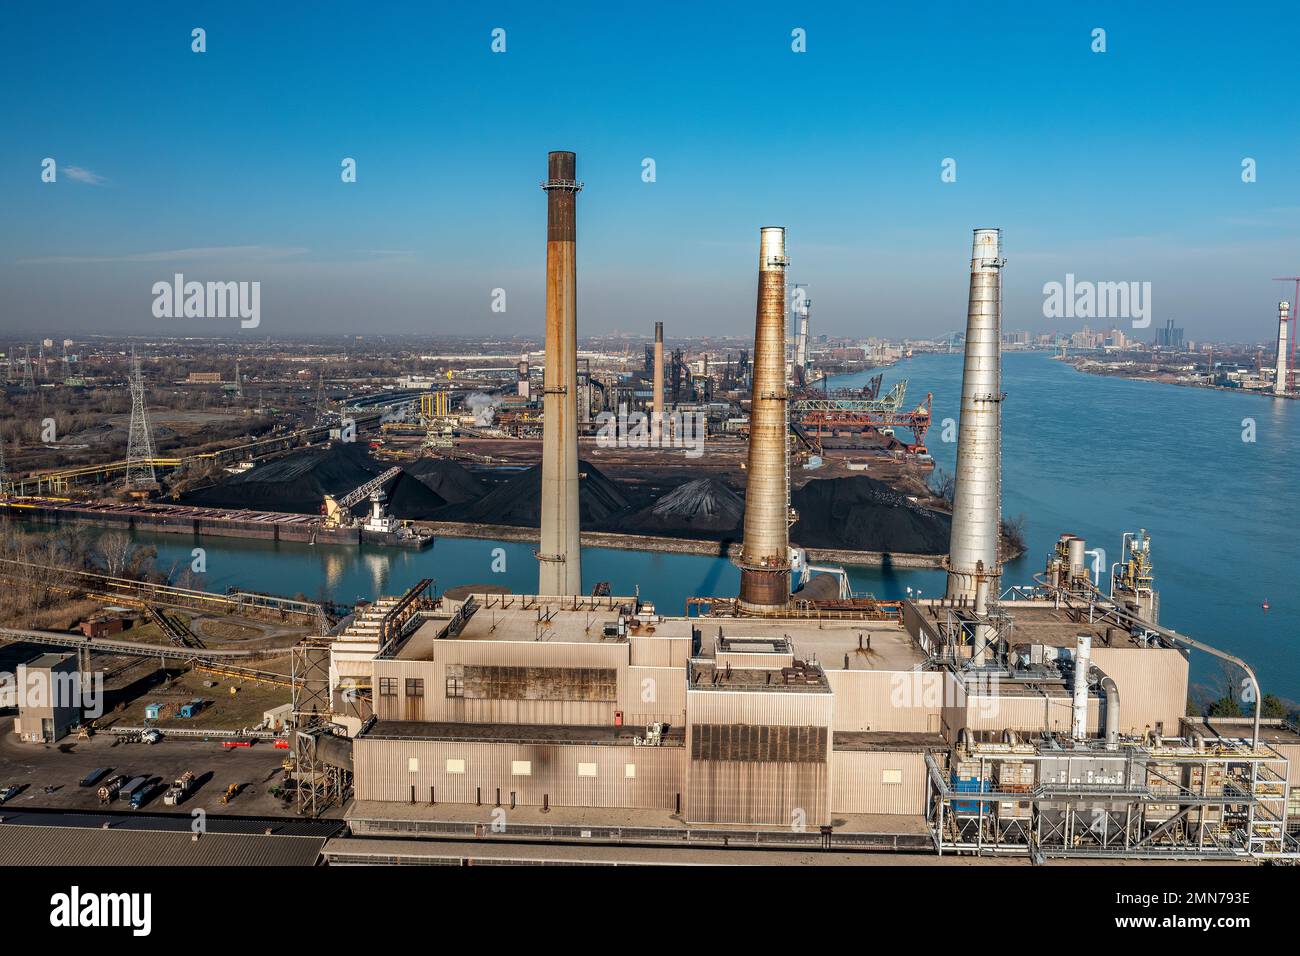 DTE River Rouge hat Ende 2022 ein Kohlekraftwerk am Ufer des Detroit River, River Rouge, Michigan, Wayne County, USA, in den Ruhestand gesetzt Stockfoto